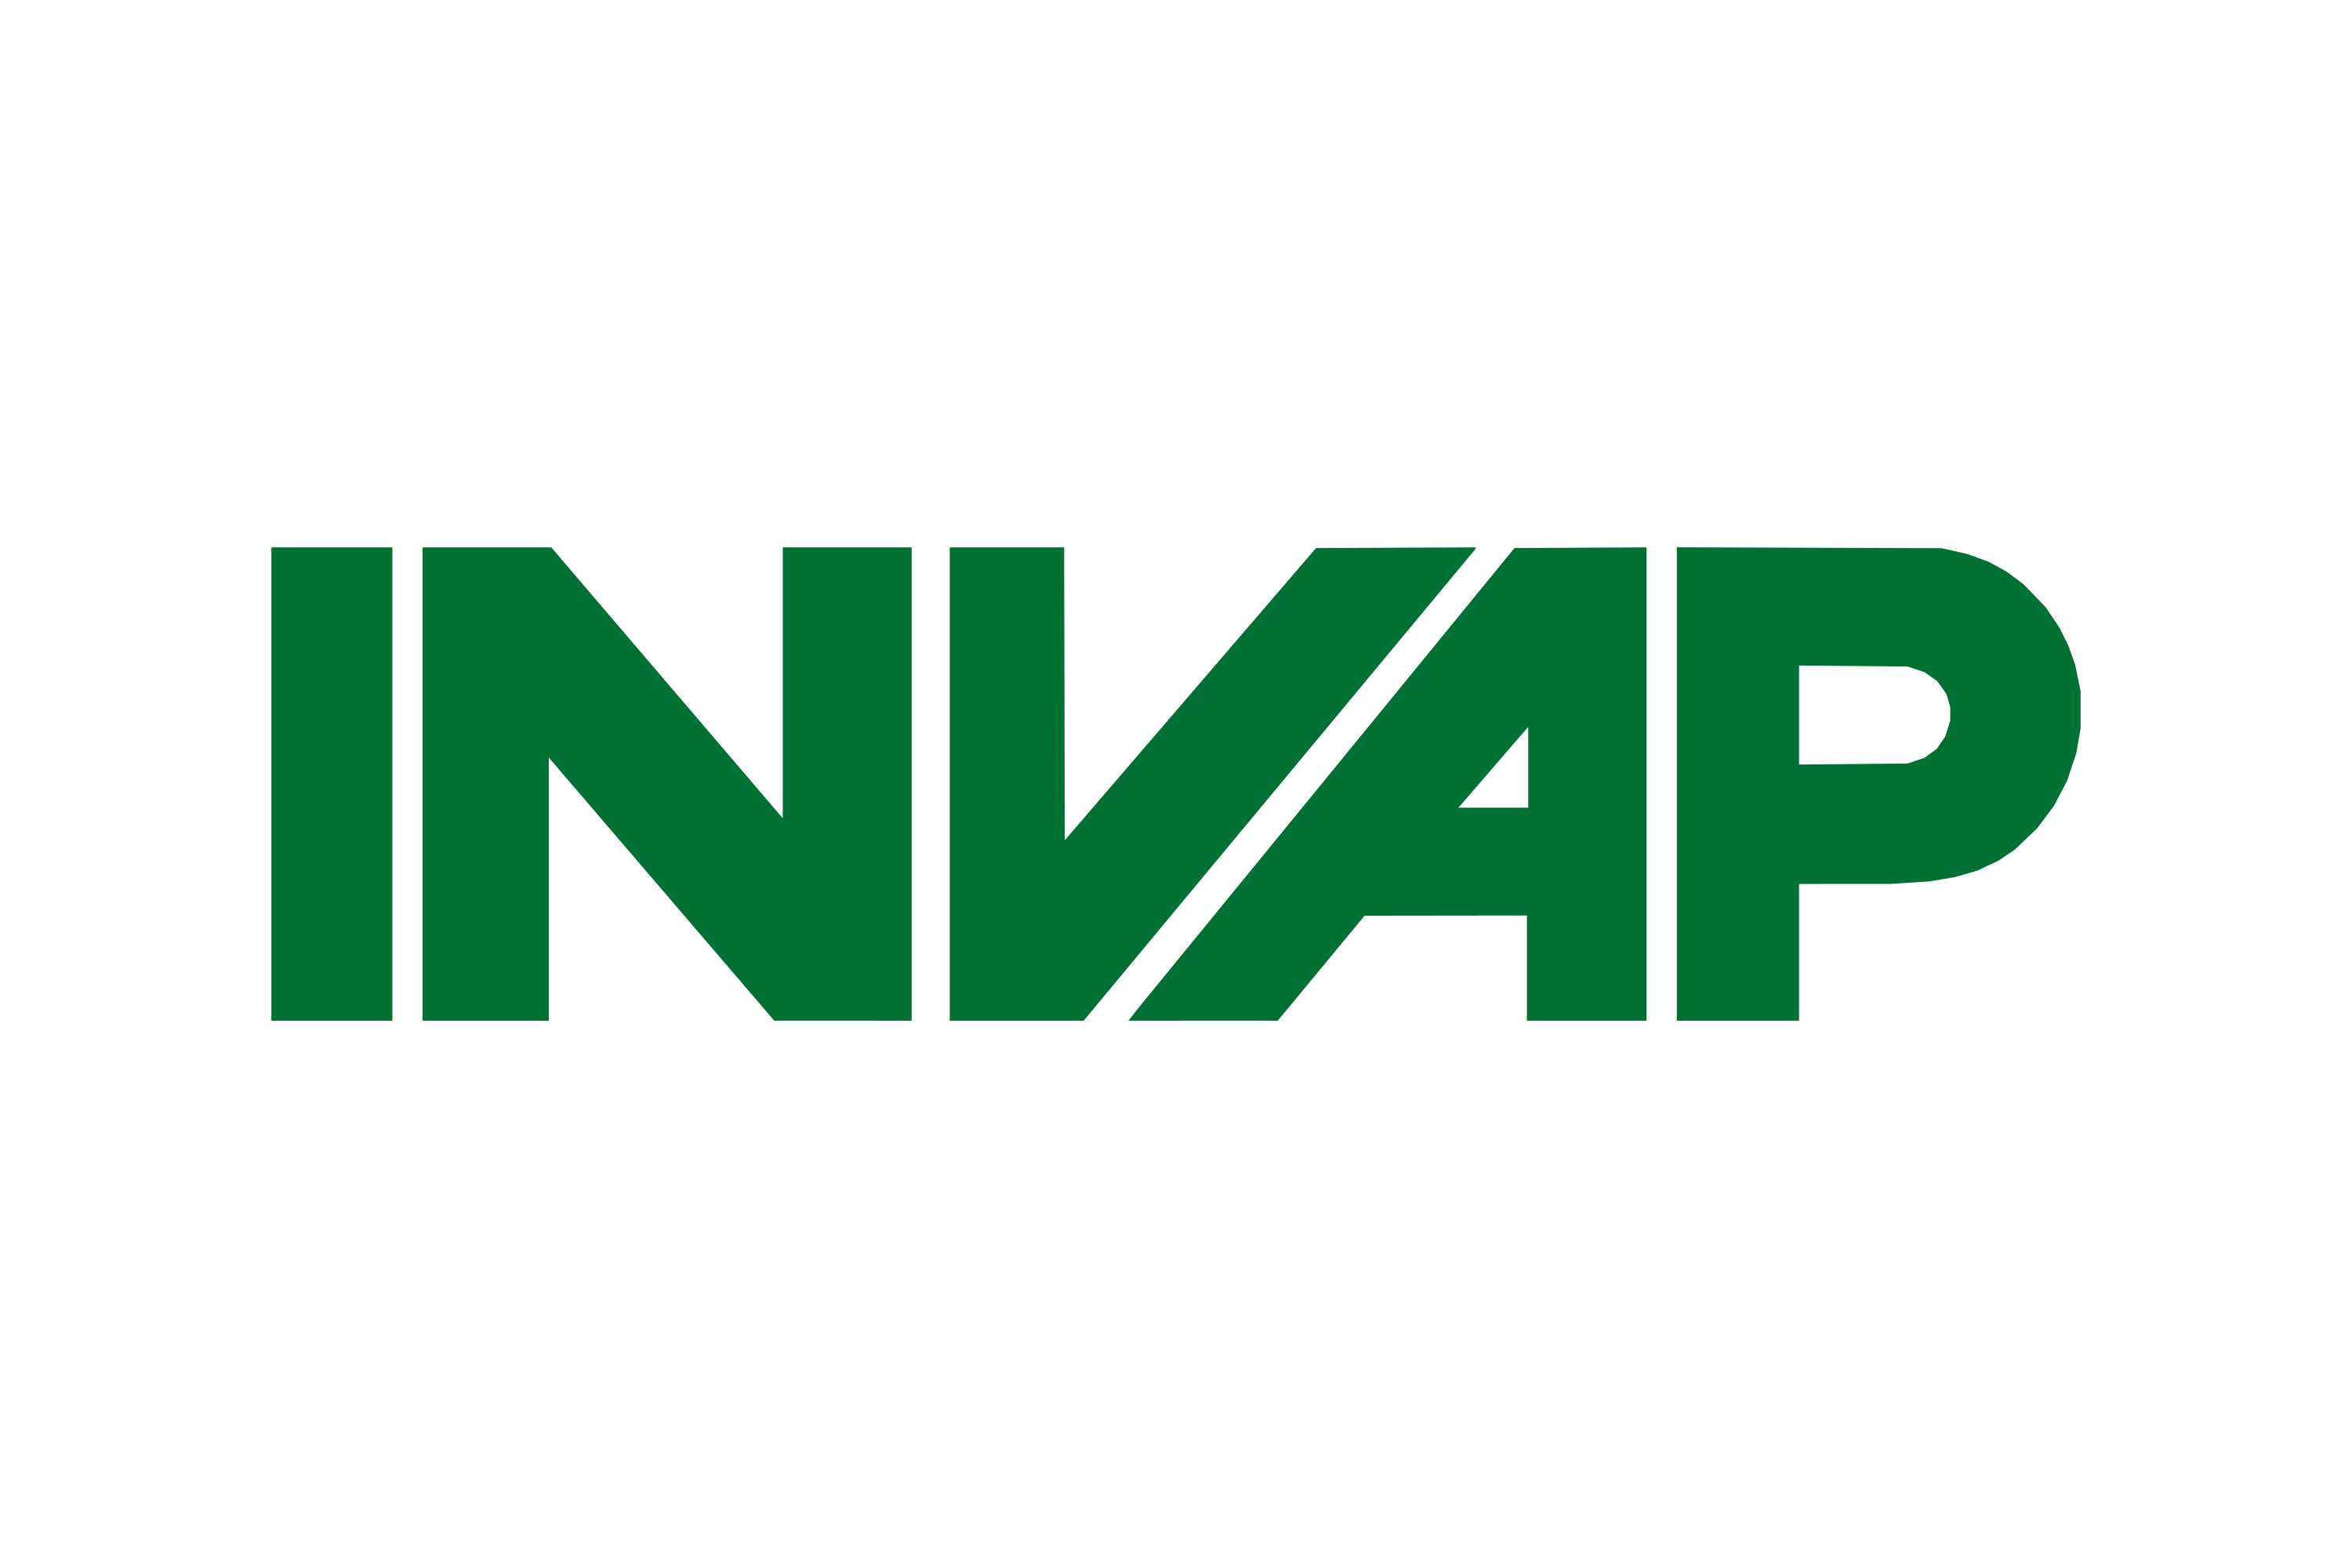 INVAP Logo